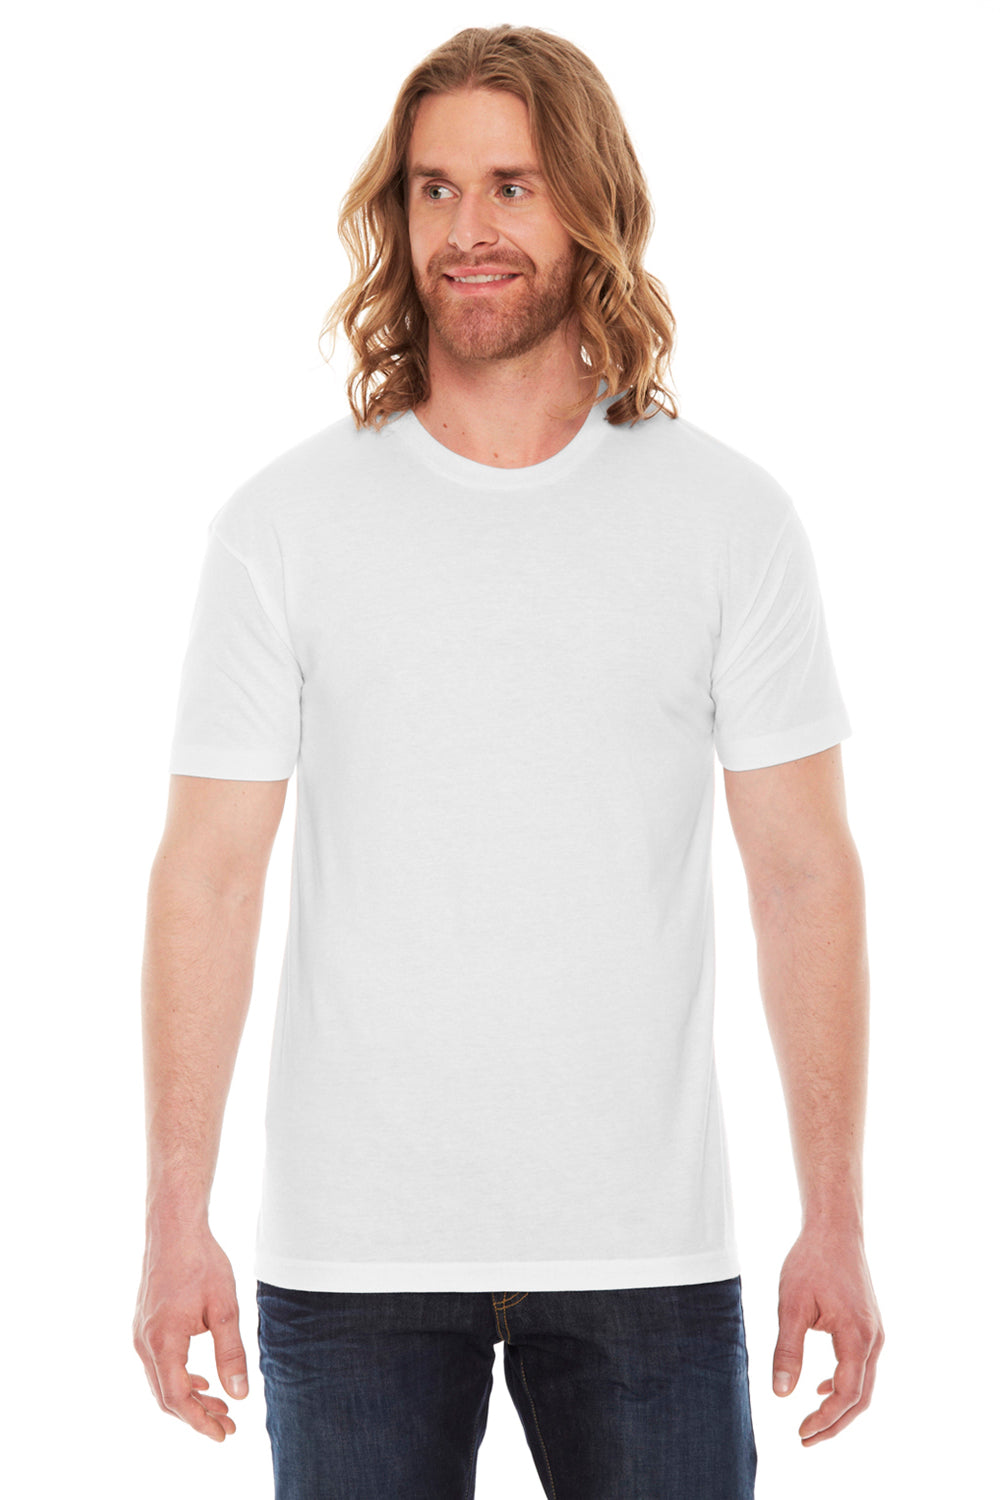 American Apparel BB401 Mens USA Made Short Sleeve Crewneck T-Shirt White Front